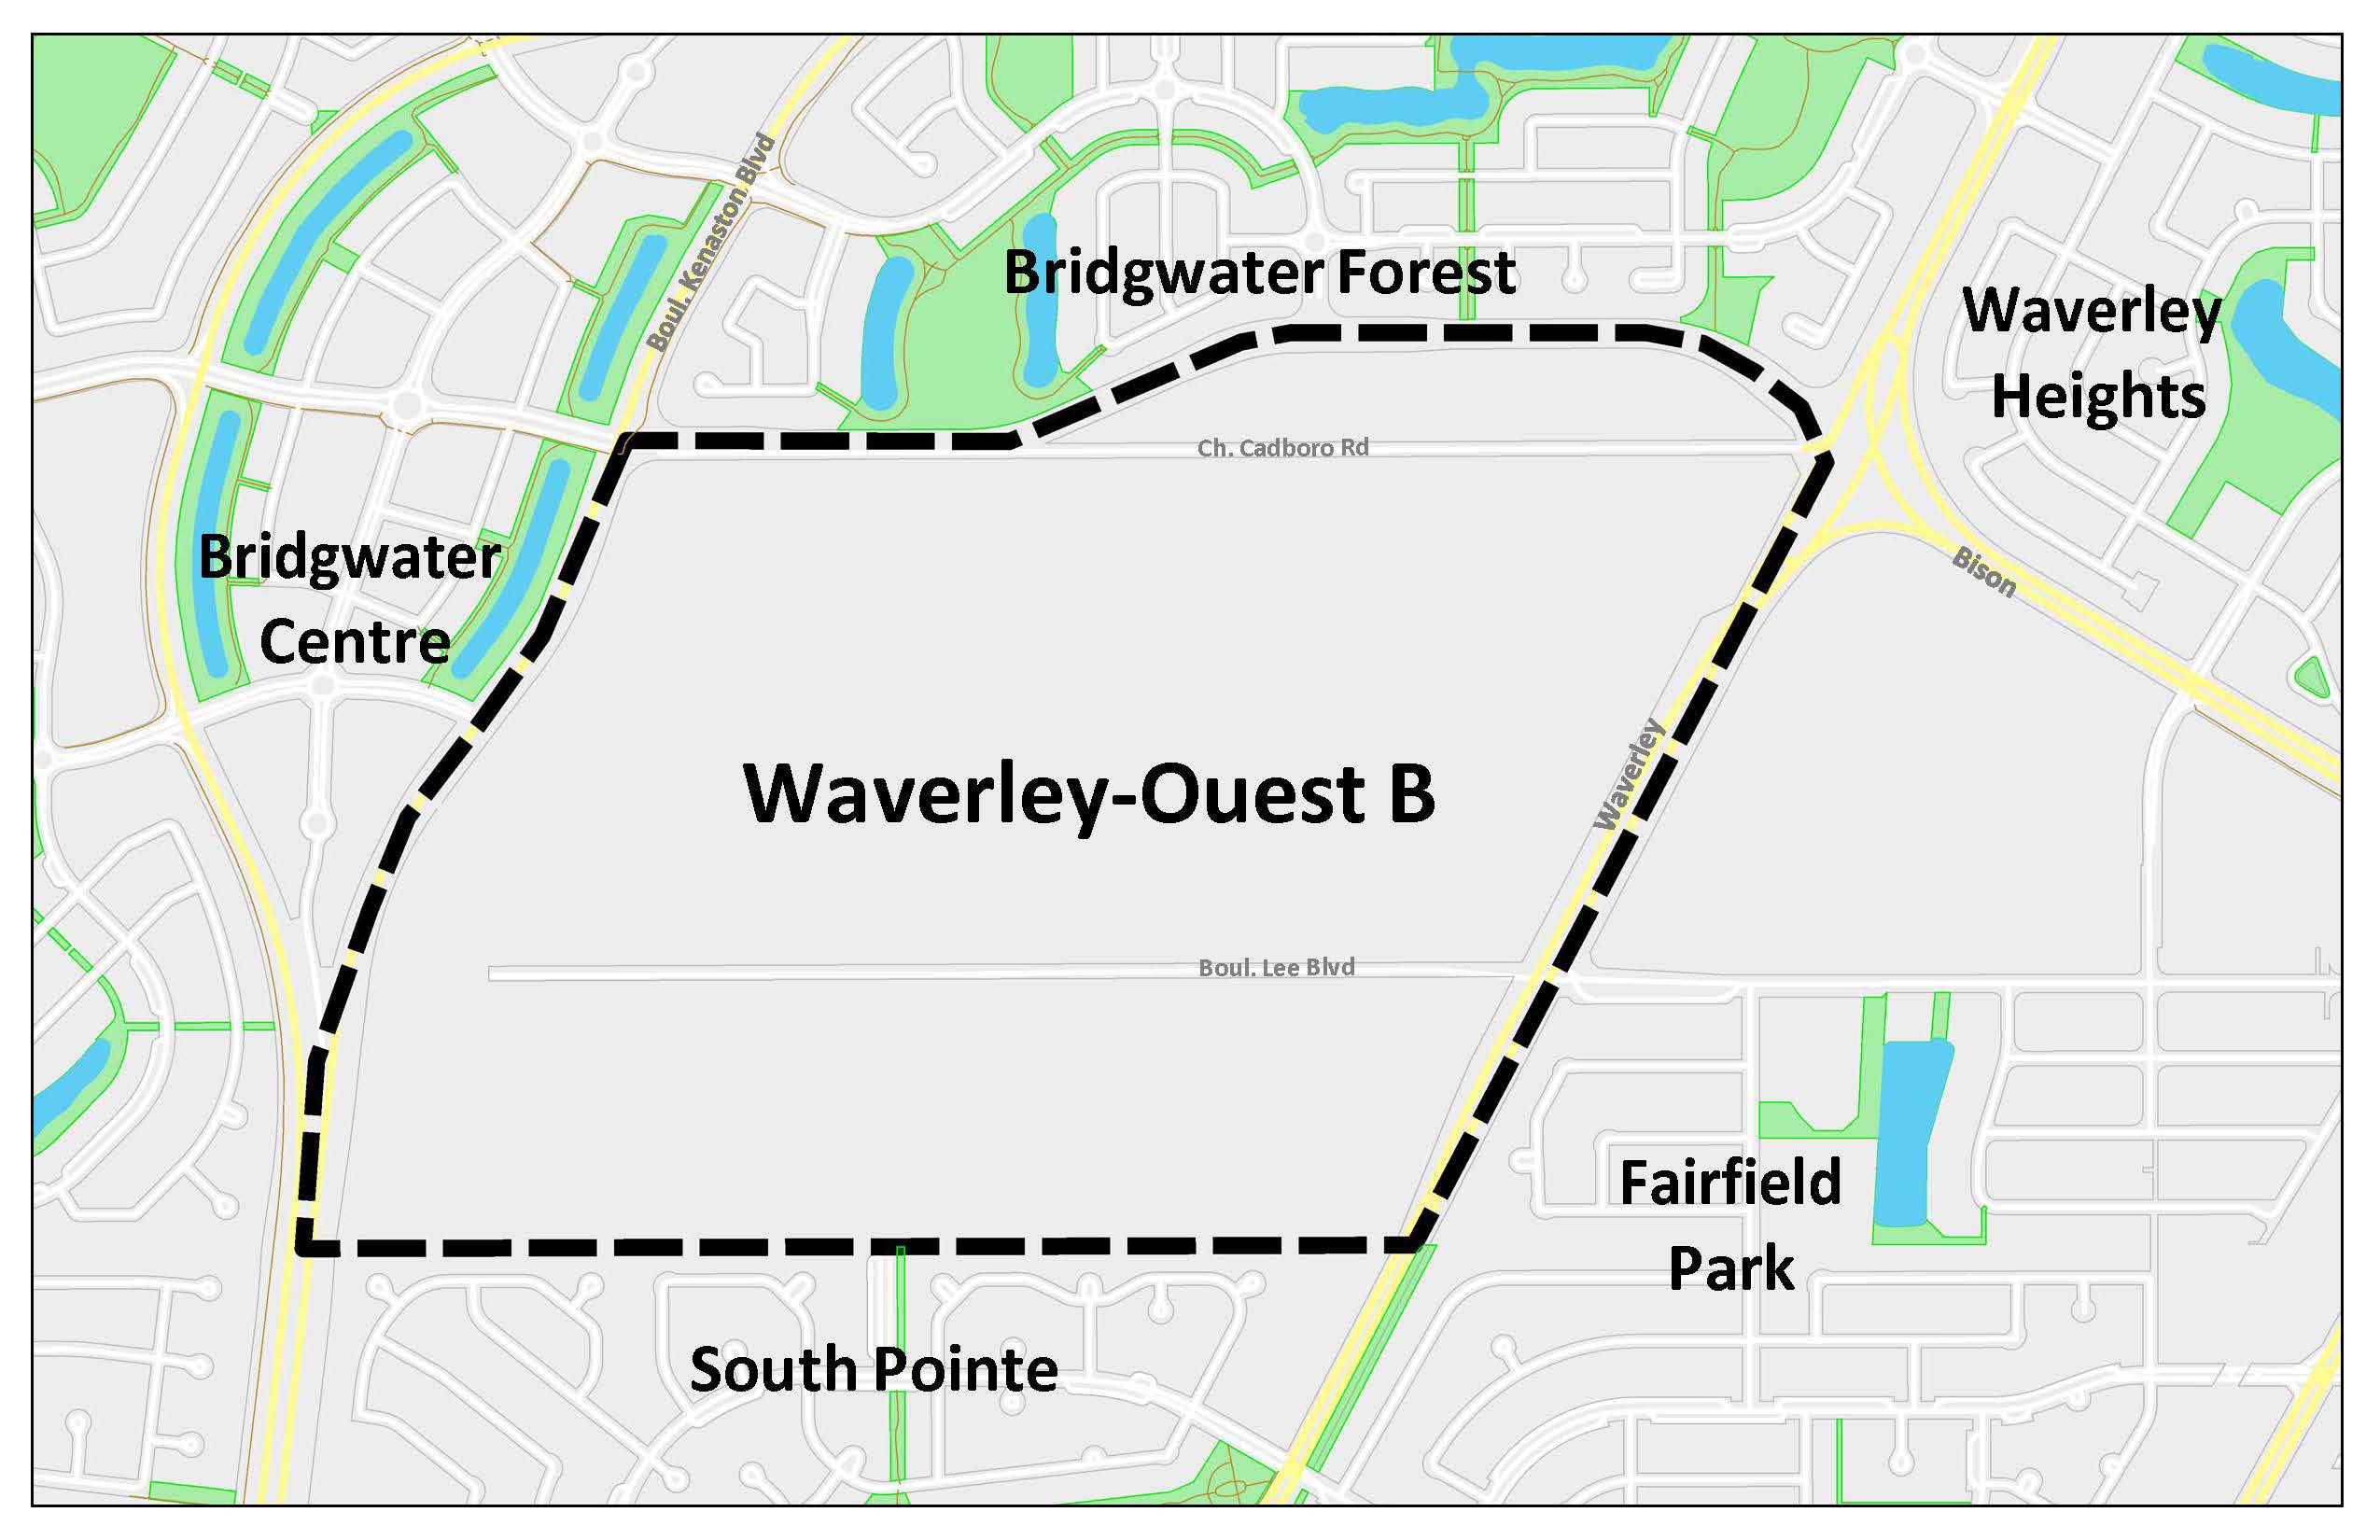 Waverley West Neighbourhood B Planning Area Map